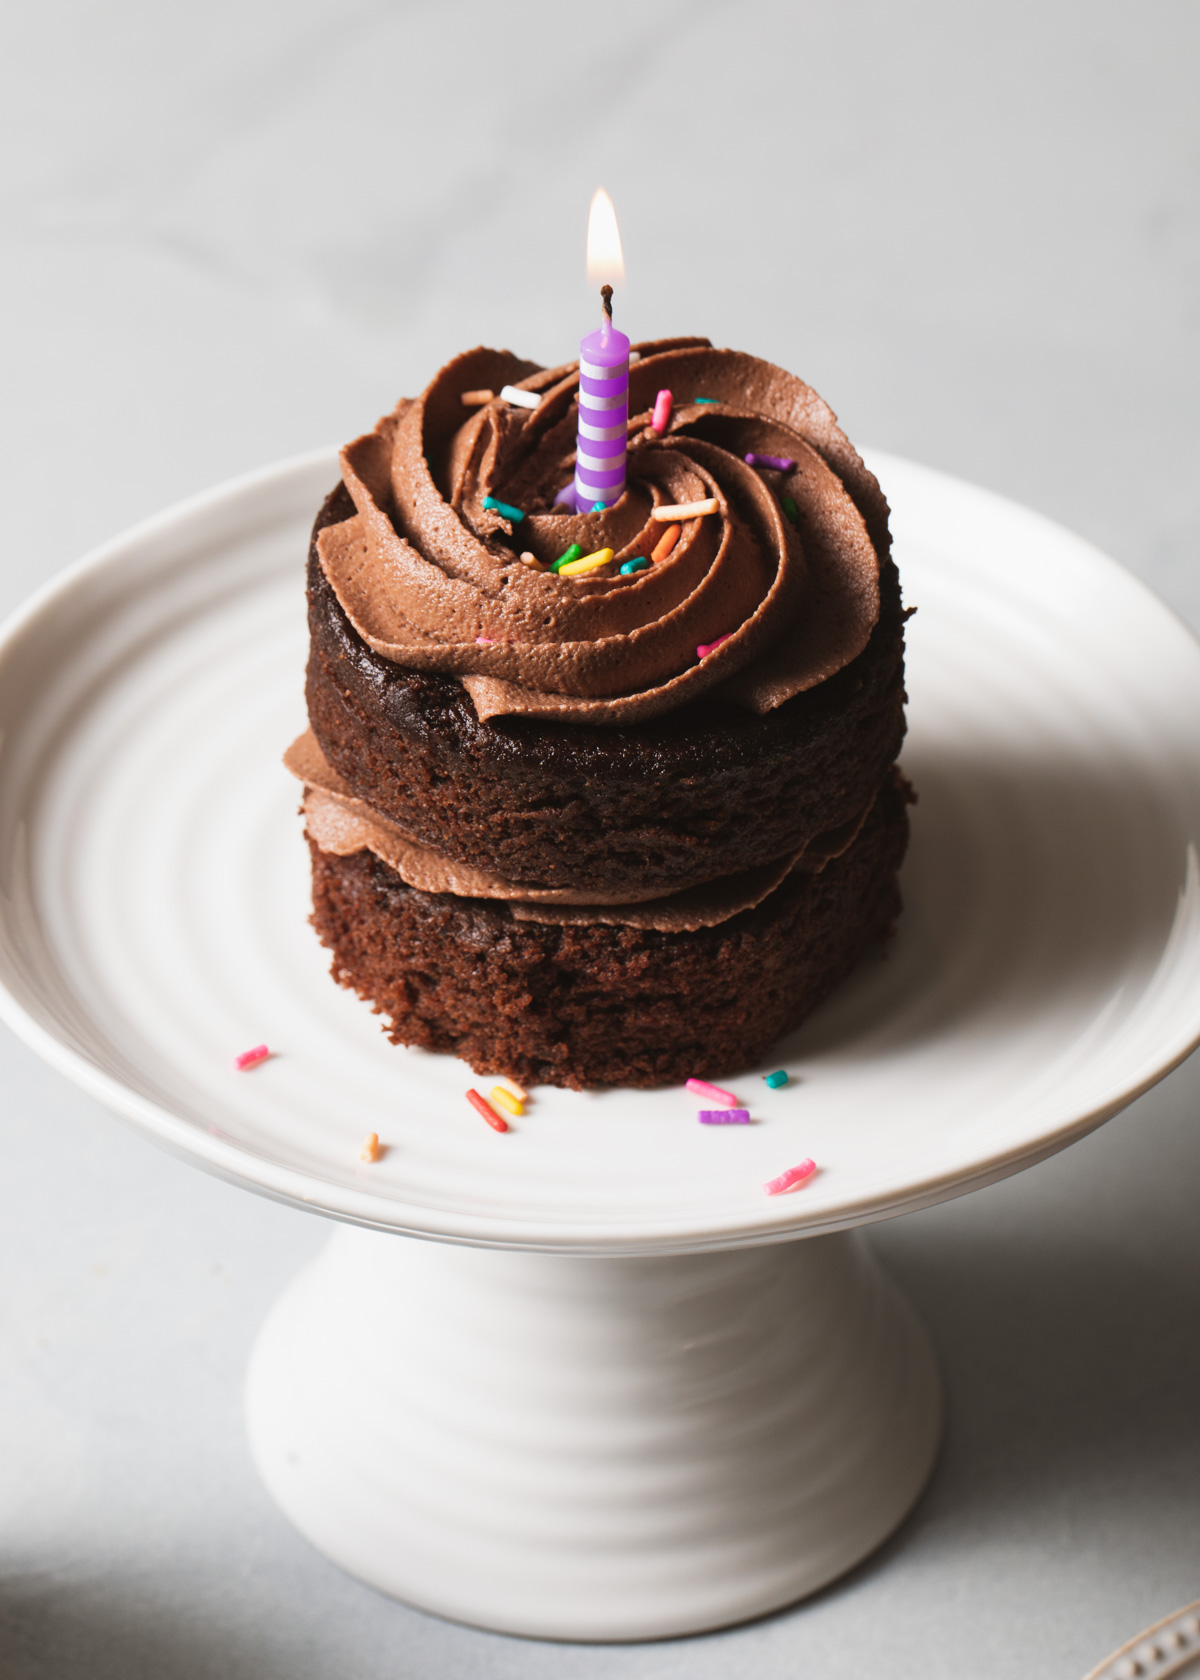 A mini chocolate cake on a small white cake stand